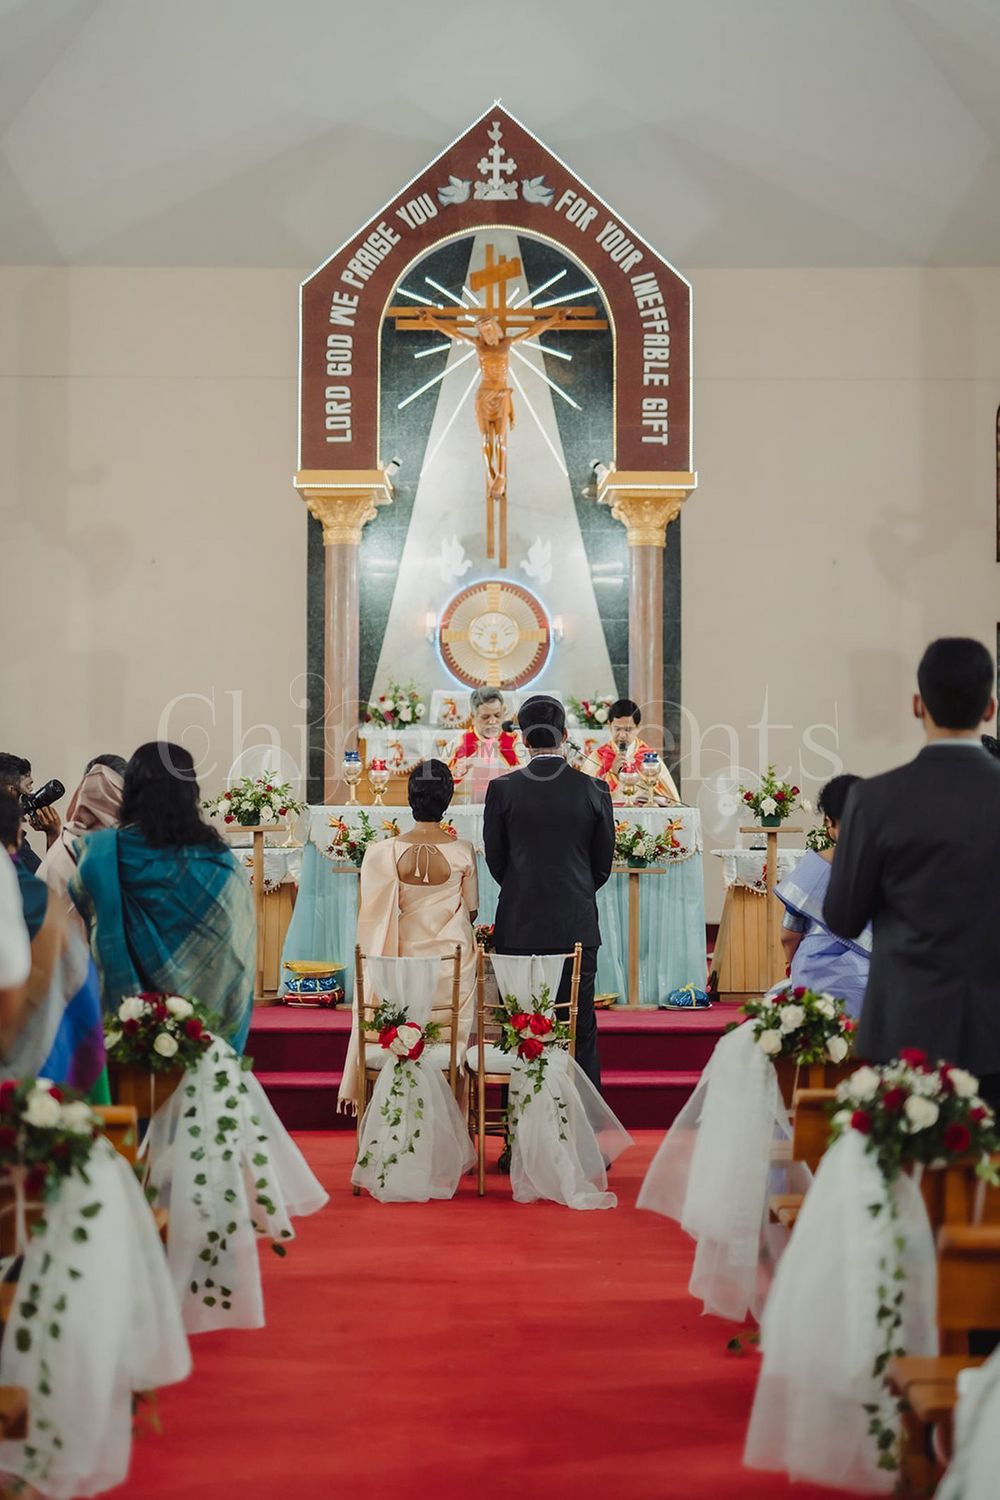 Photo From S & V - A Church wedding - By Chirmi 